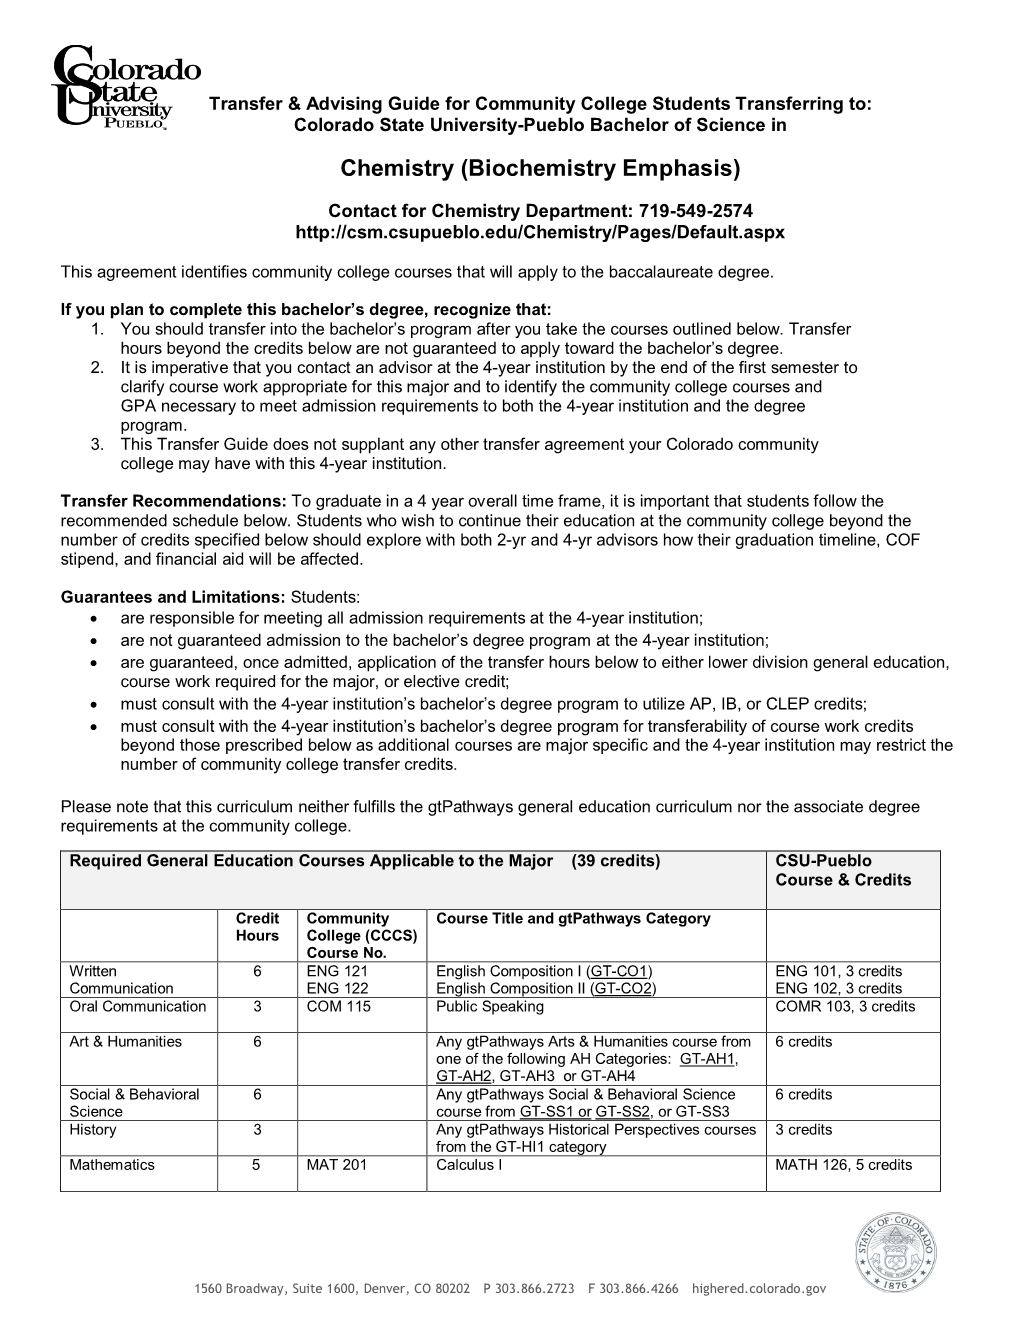 Chemistry (Biochemistry Emphasis)